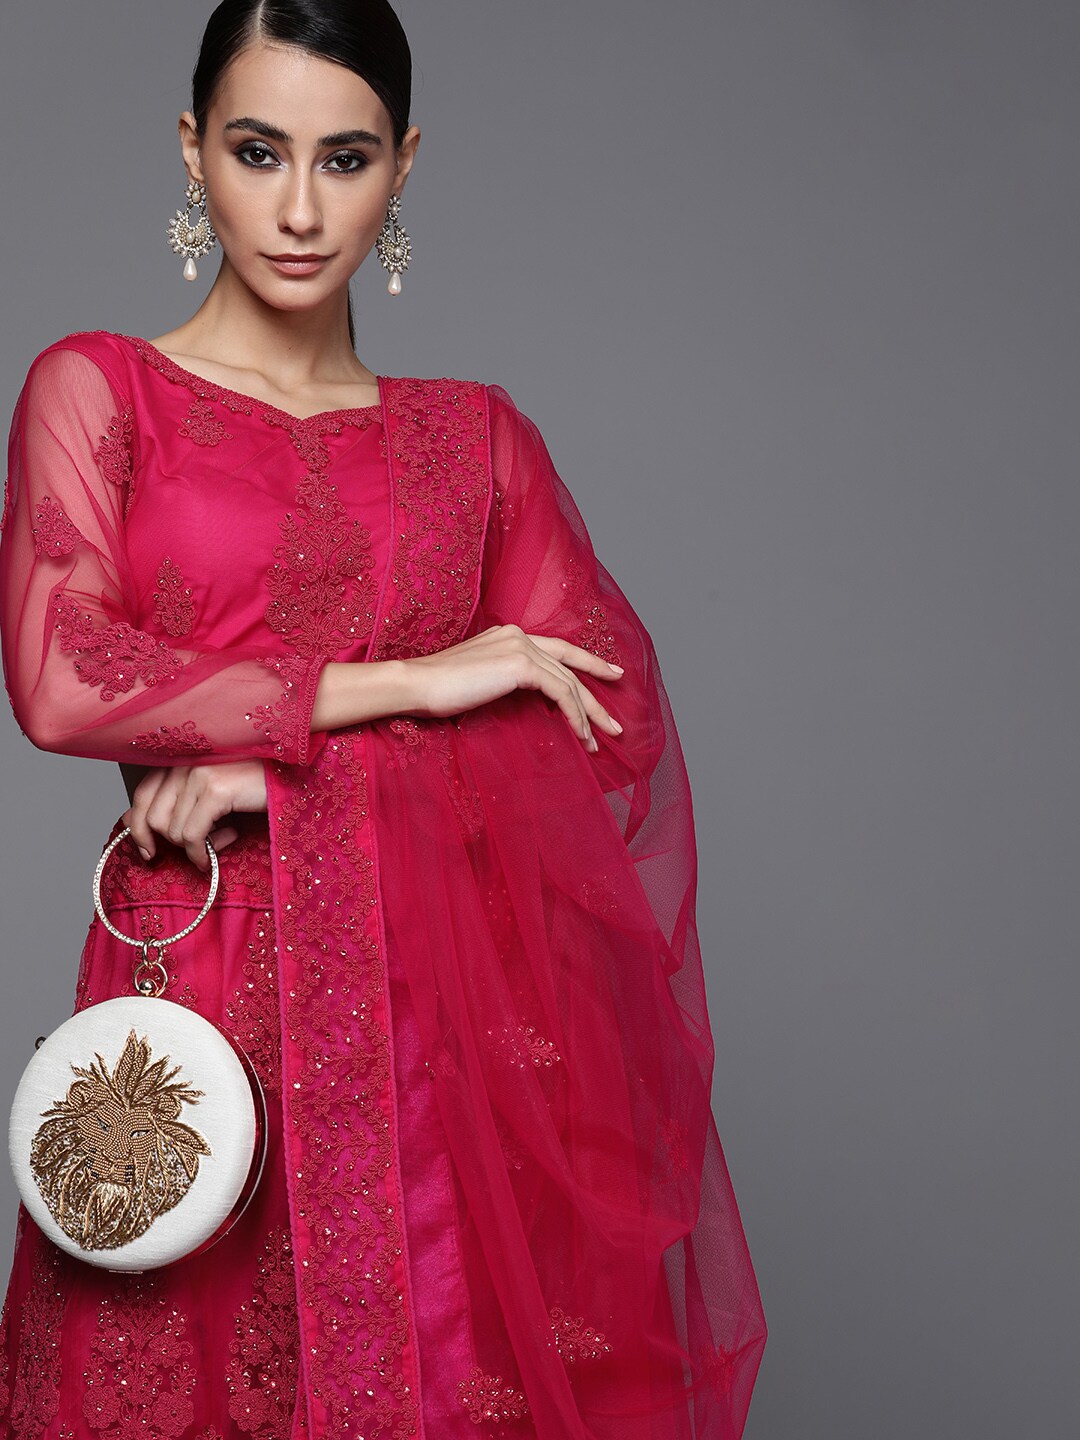 Inddus Women Magenta Embellished Semi-Stitched Lehenga & Unstitched Blouse With Dupatta Price in India